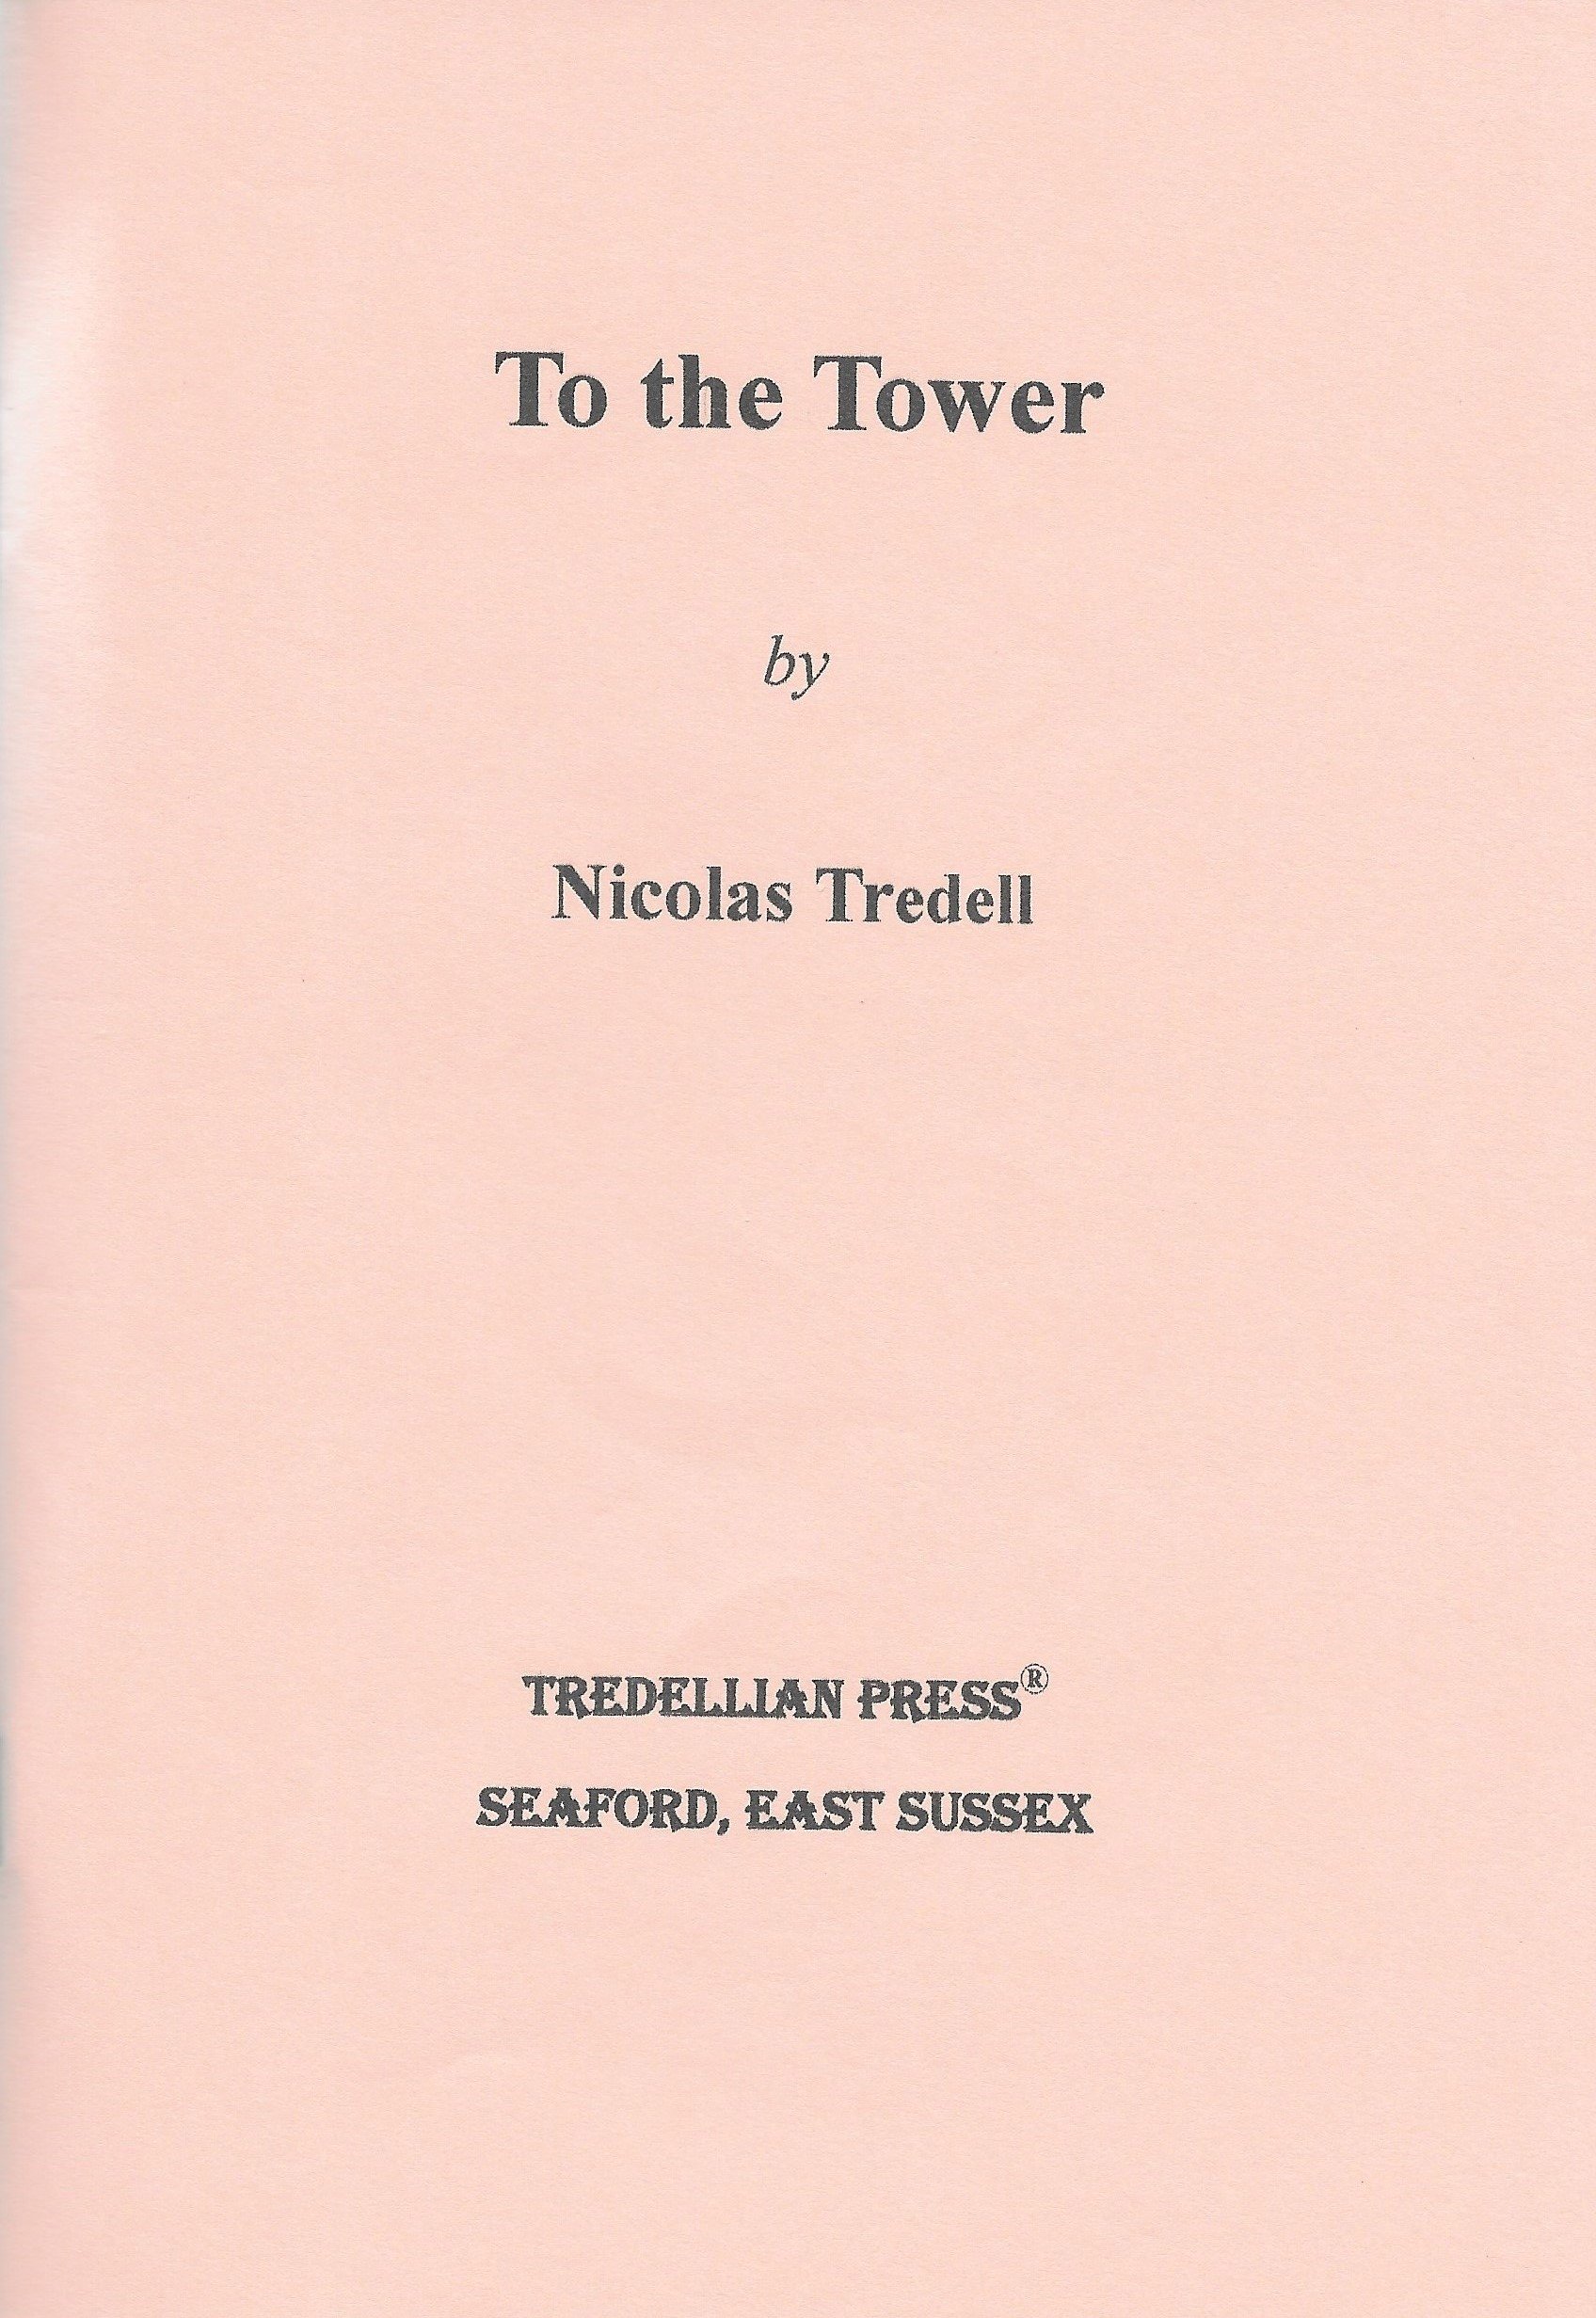 https://0201.nccdn.net/1_2/000/000/09c/c76/tp-to-the-tower-cover-21-mar-22.jpg